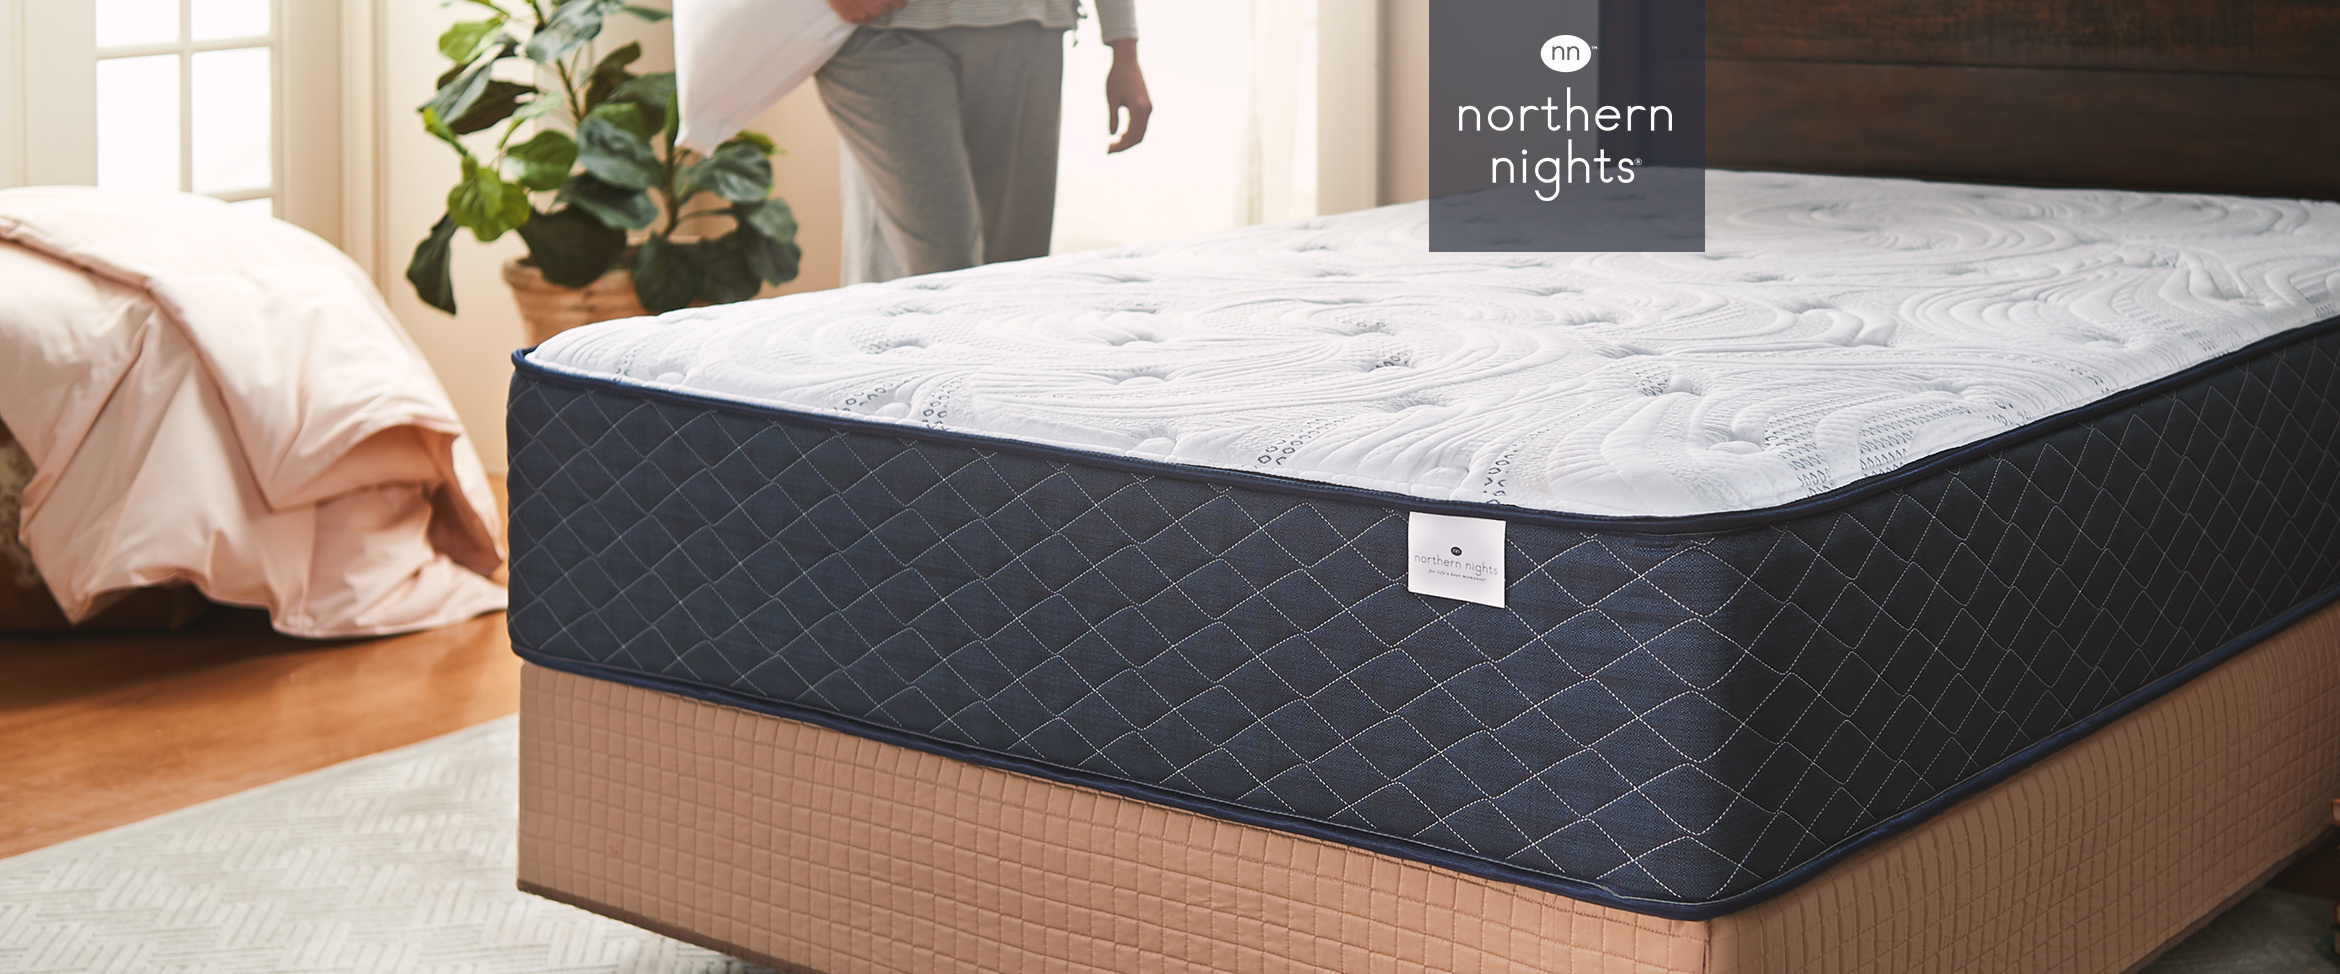 northern nights twin mattress